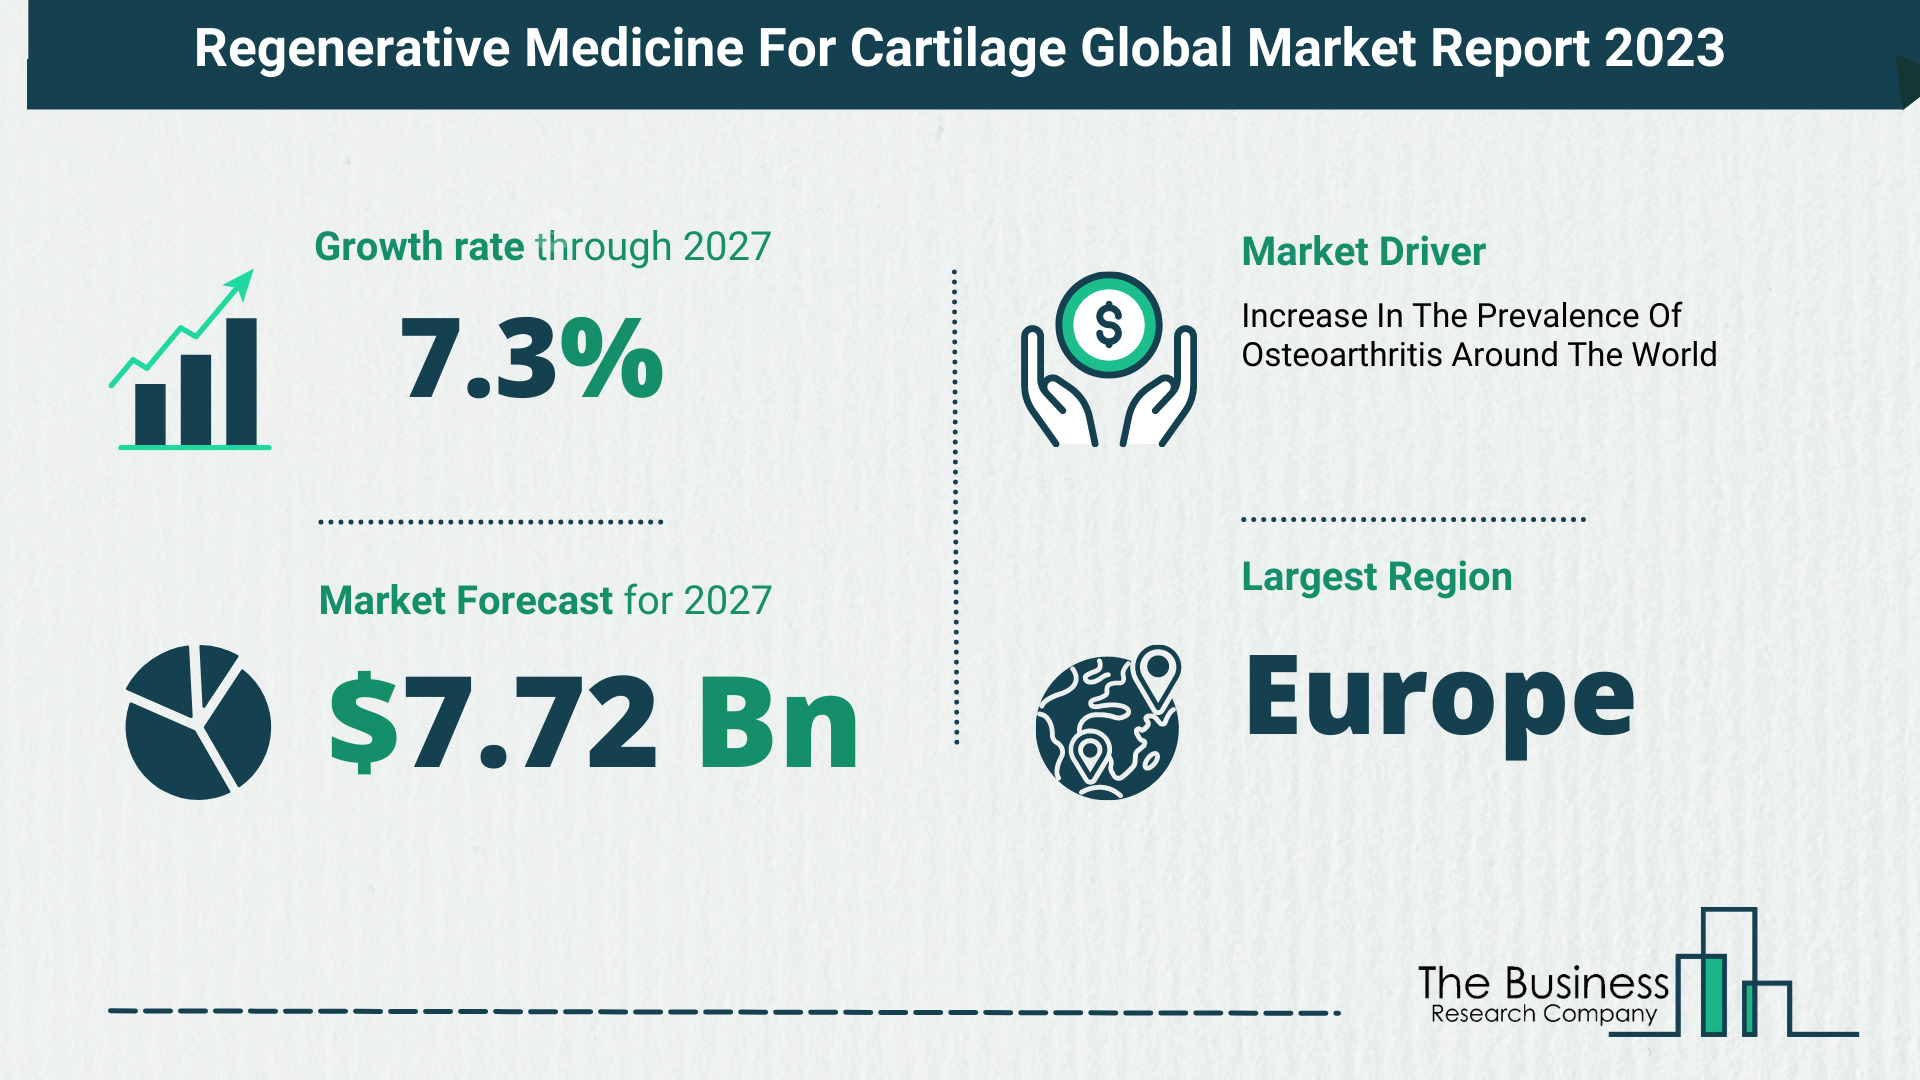 5 Takeaways From The Regenerative Medicine For Cartilage Market Overview 2023